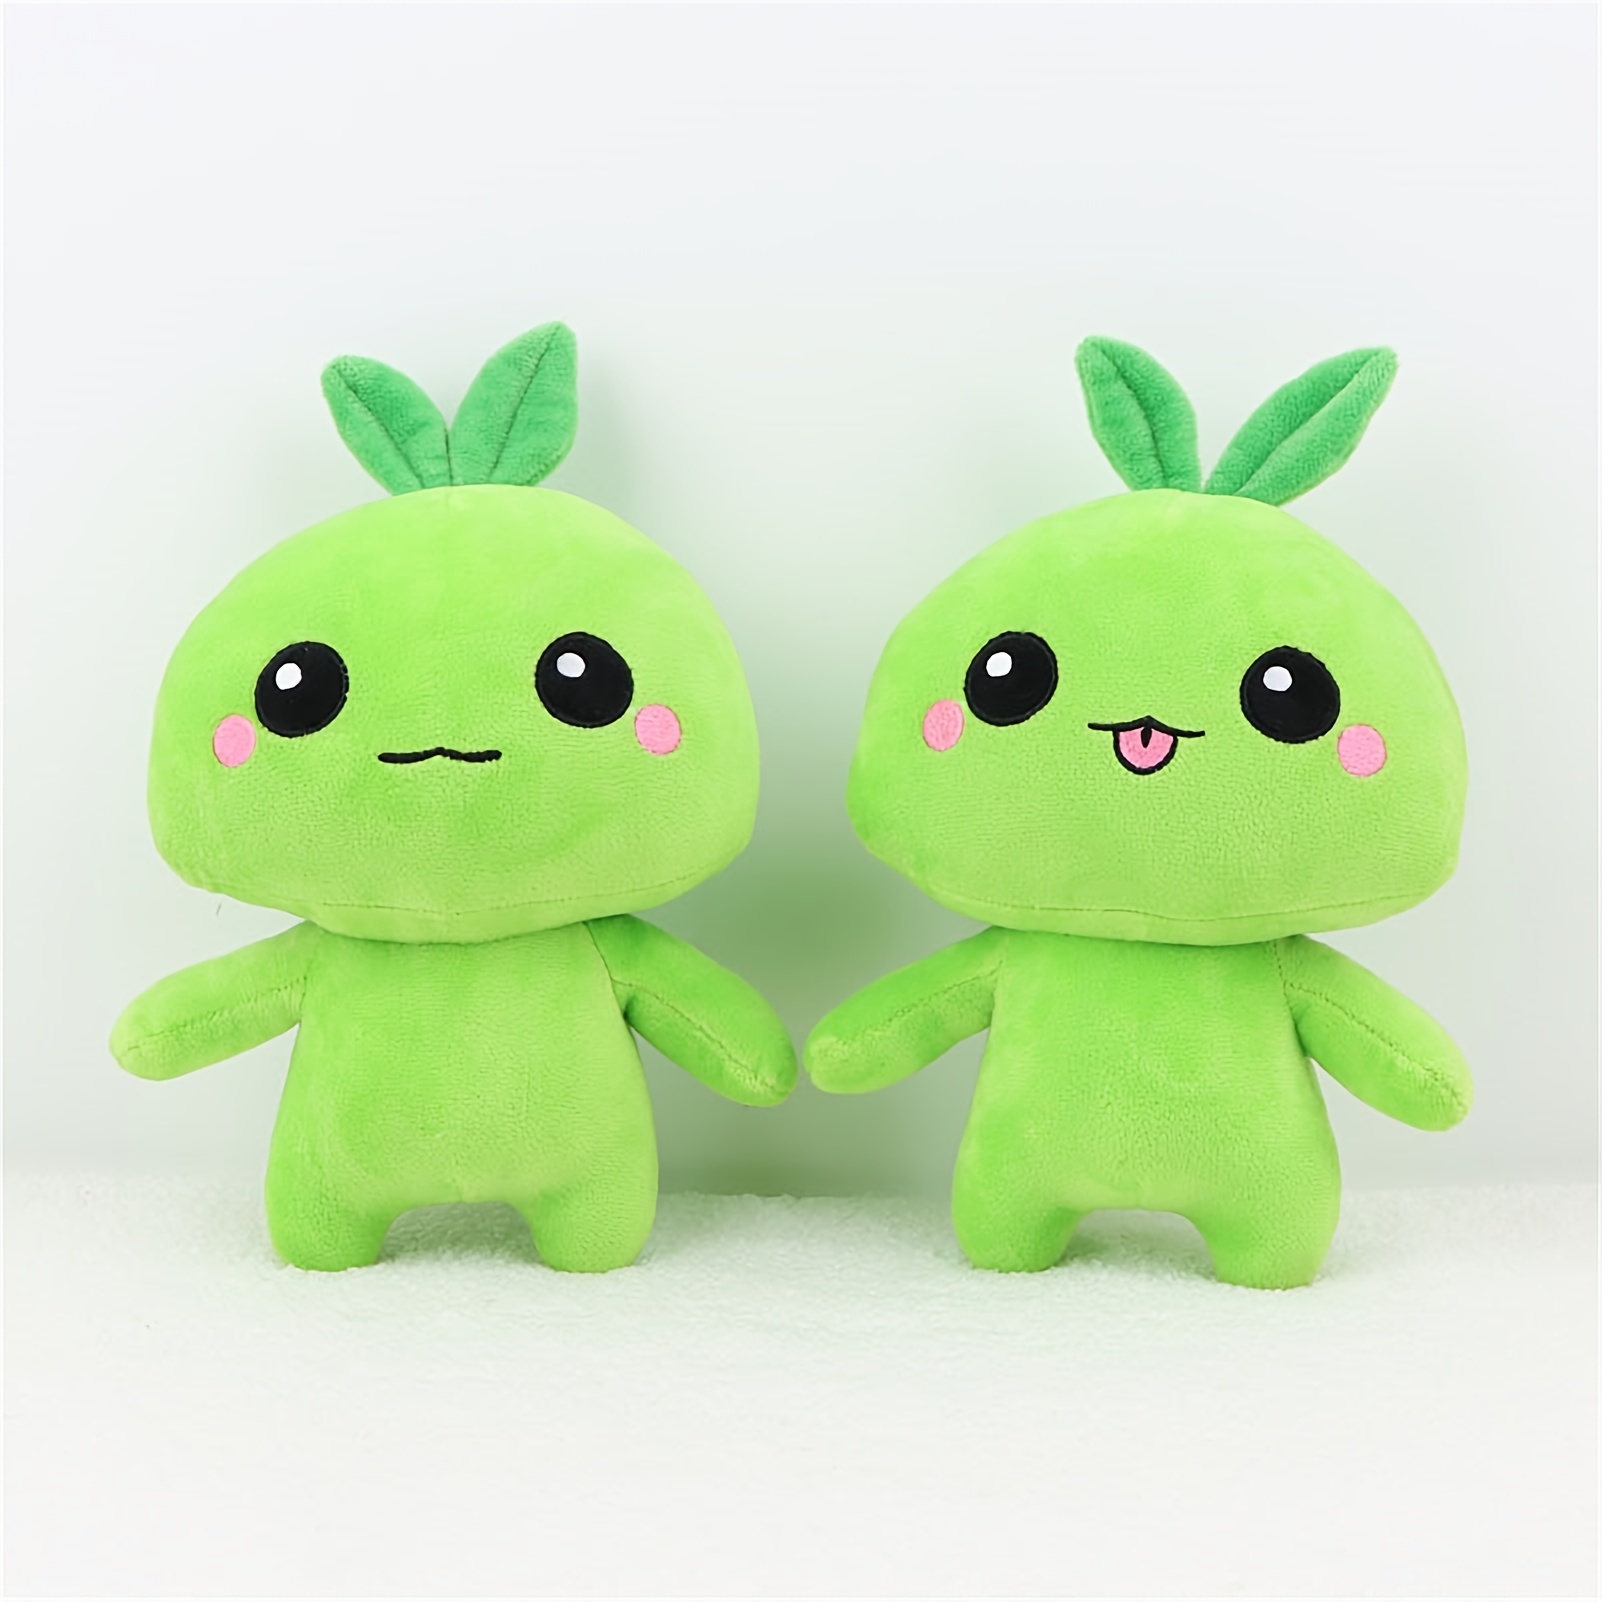 10 2inch Losark Kawaii Mokoko Seed Plush Toy Cute Green Plushies Sleeping Pillow Game Soft Cartoon Stuffed Doll Kids Birthday Gift